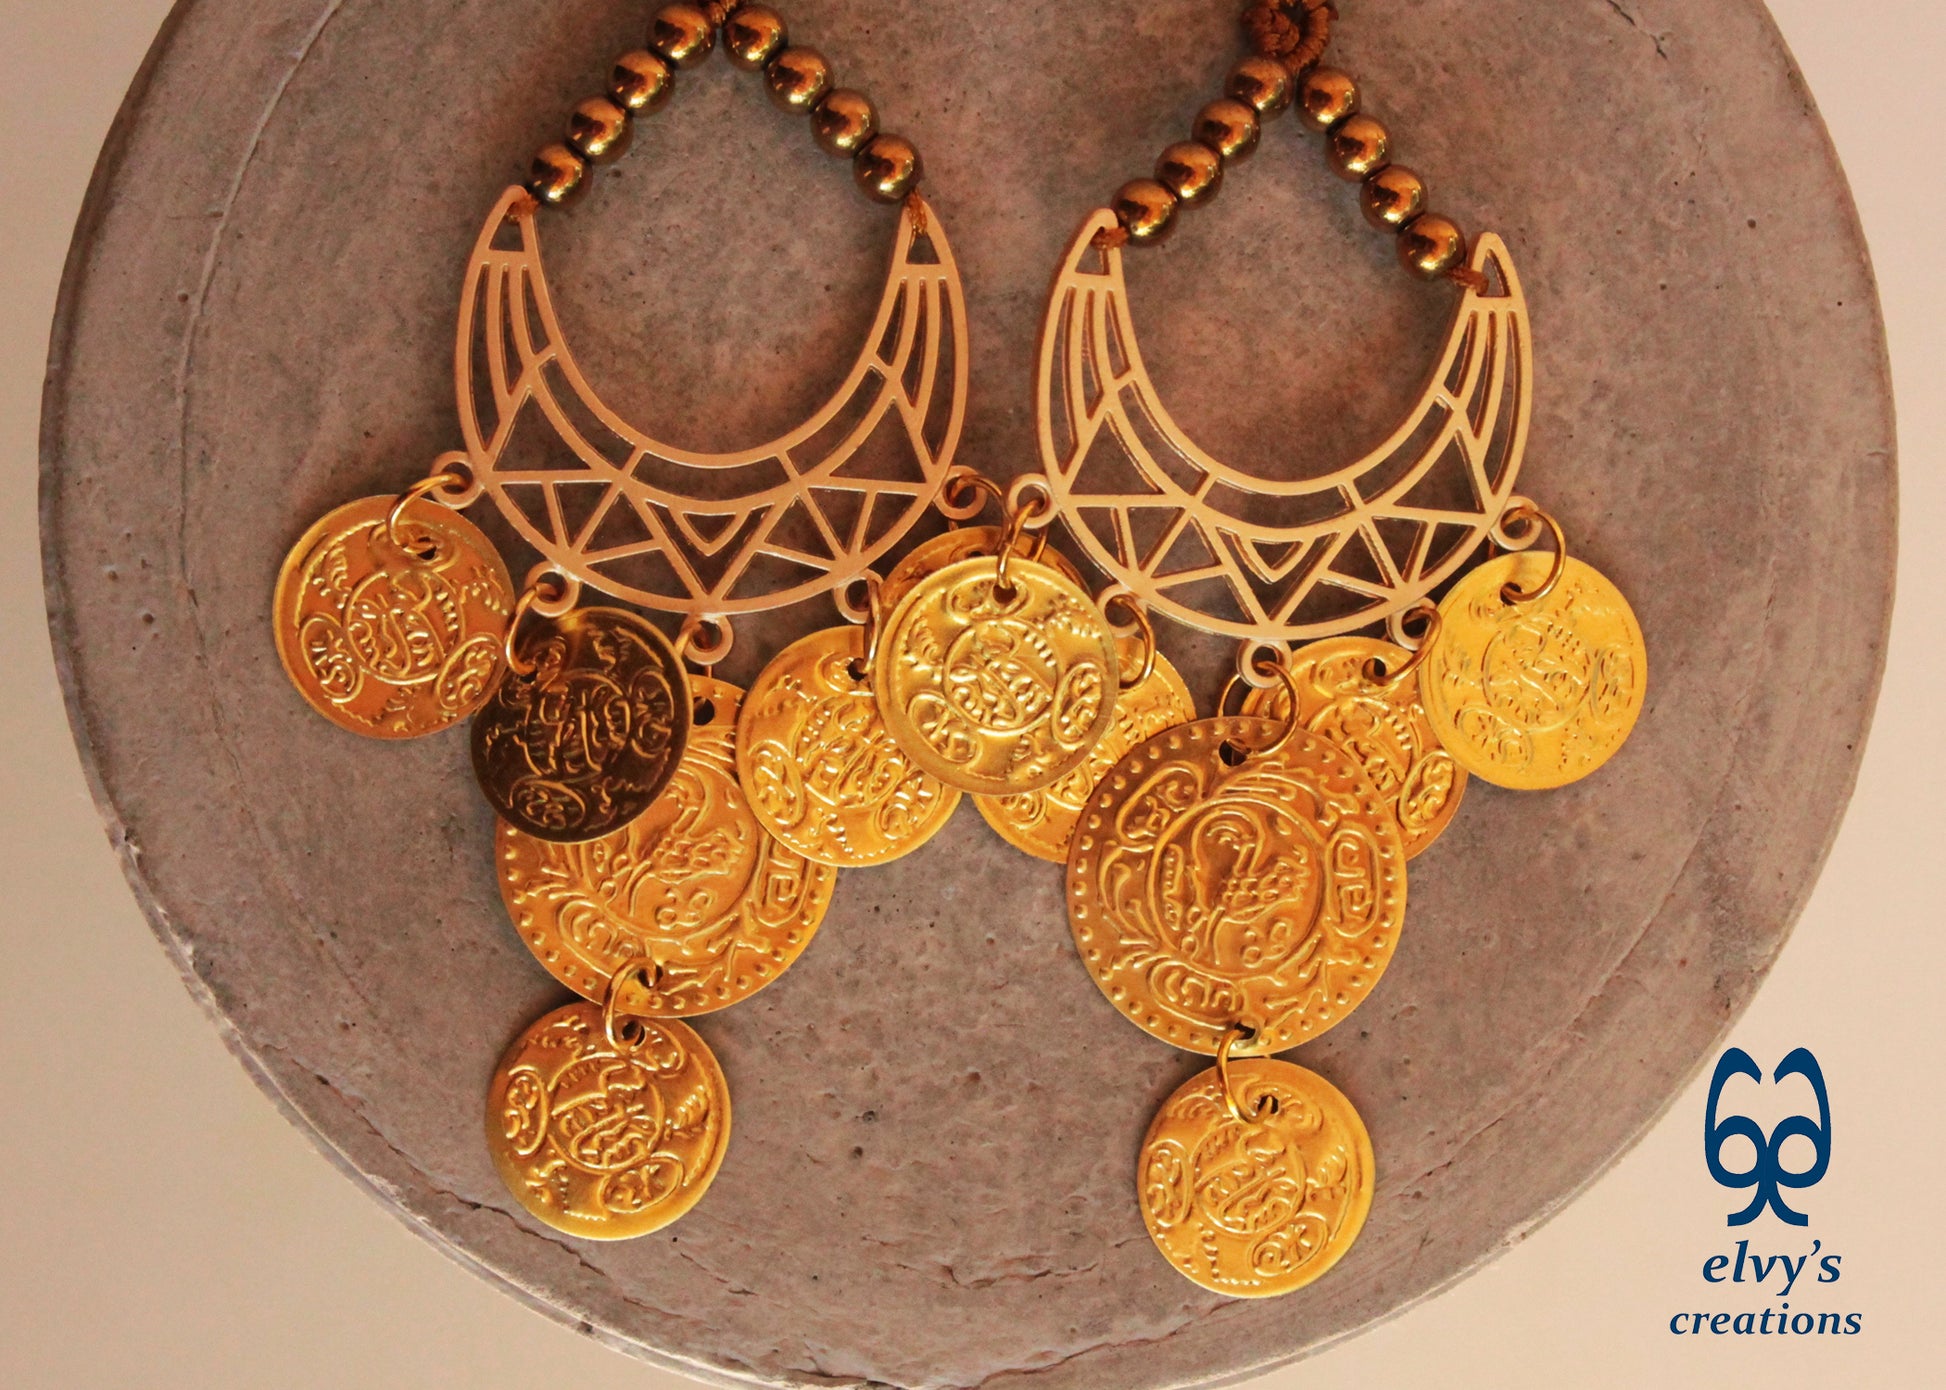 Gold Macrame Earrings with Hematite Gemstones Gypsy Earrings with Coins Boho Dangle with Coins, Μακραμέ Σκουλαρίκια με Χρυσά Φλουριά και Κρυστάλλους Αιματίτη